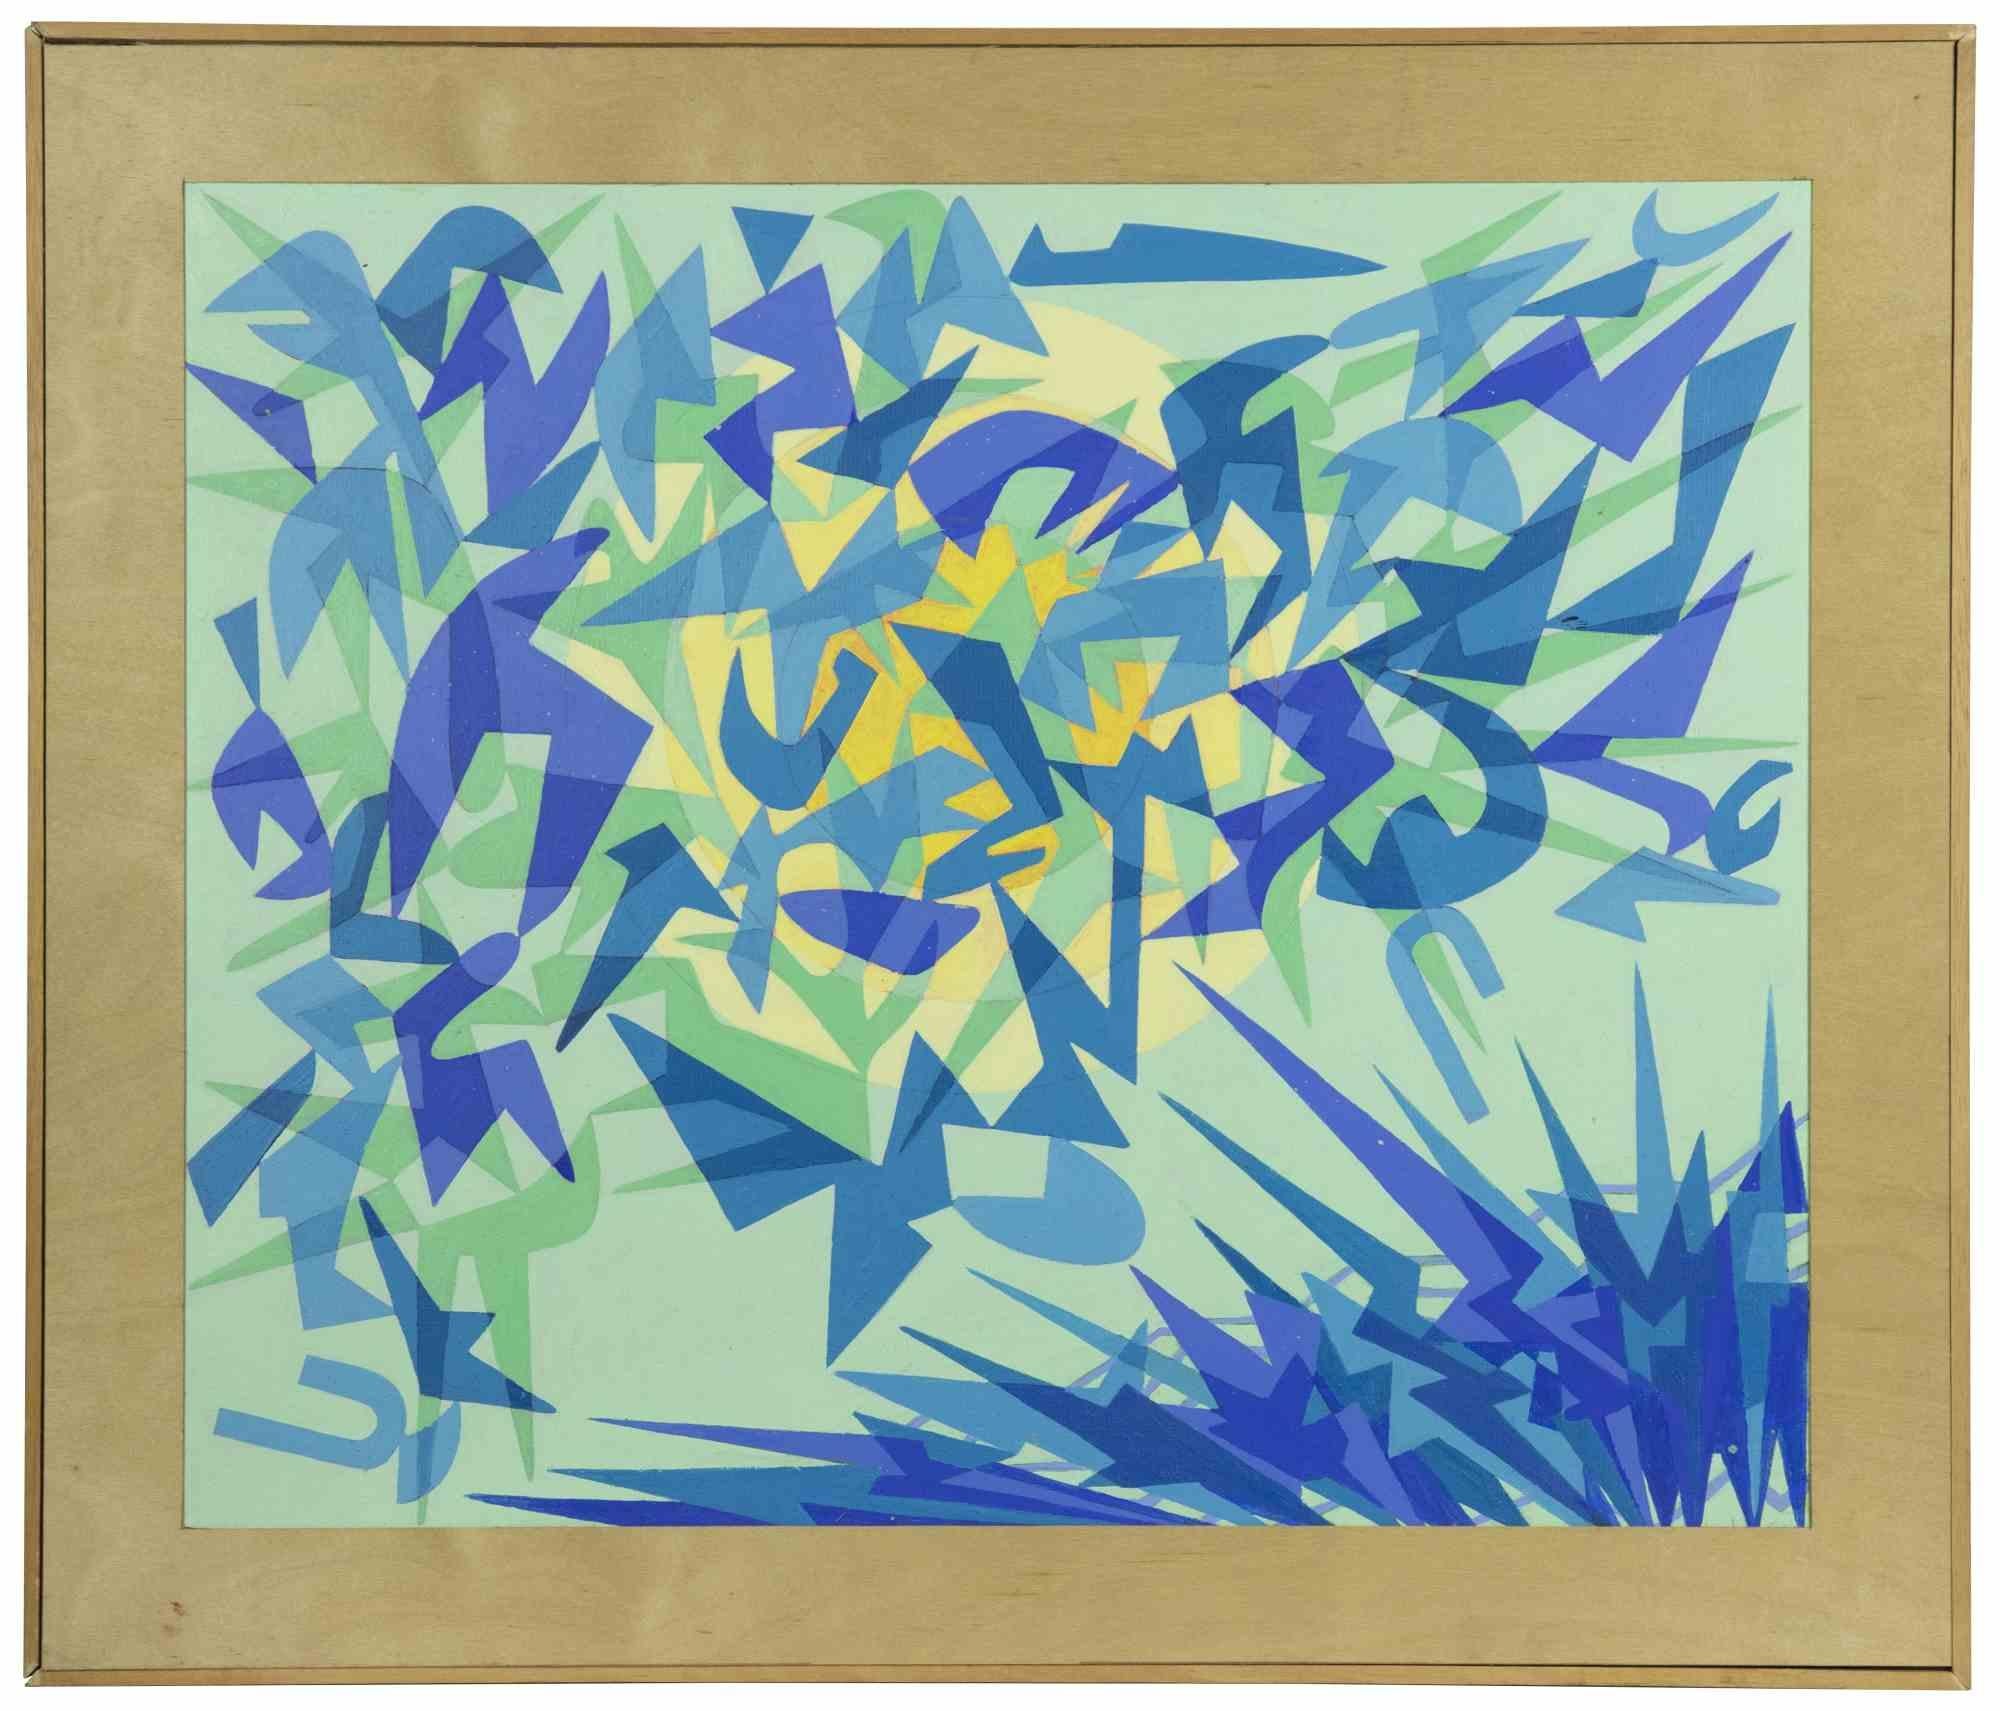 Explosion bleue - Peinture de Leo Guida - 1970